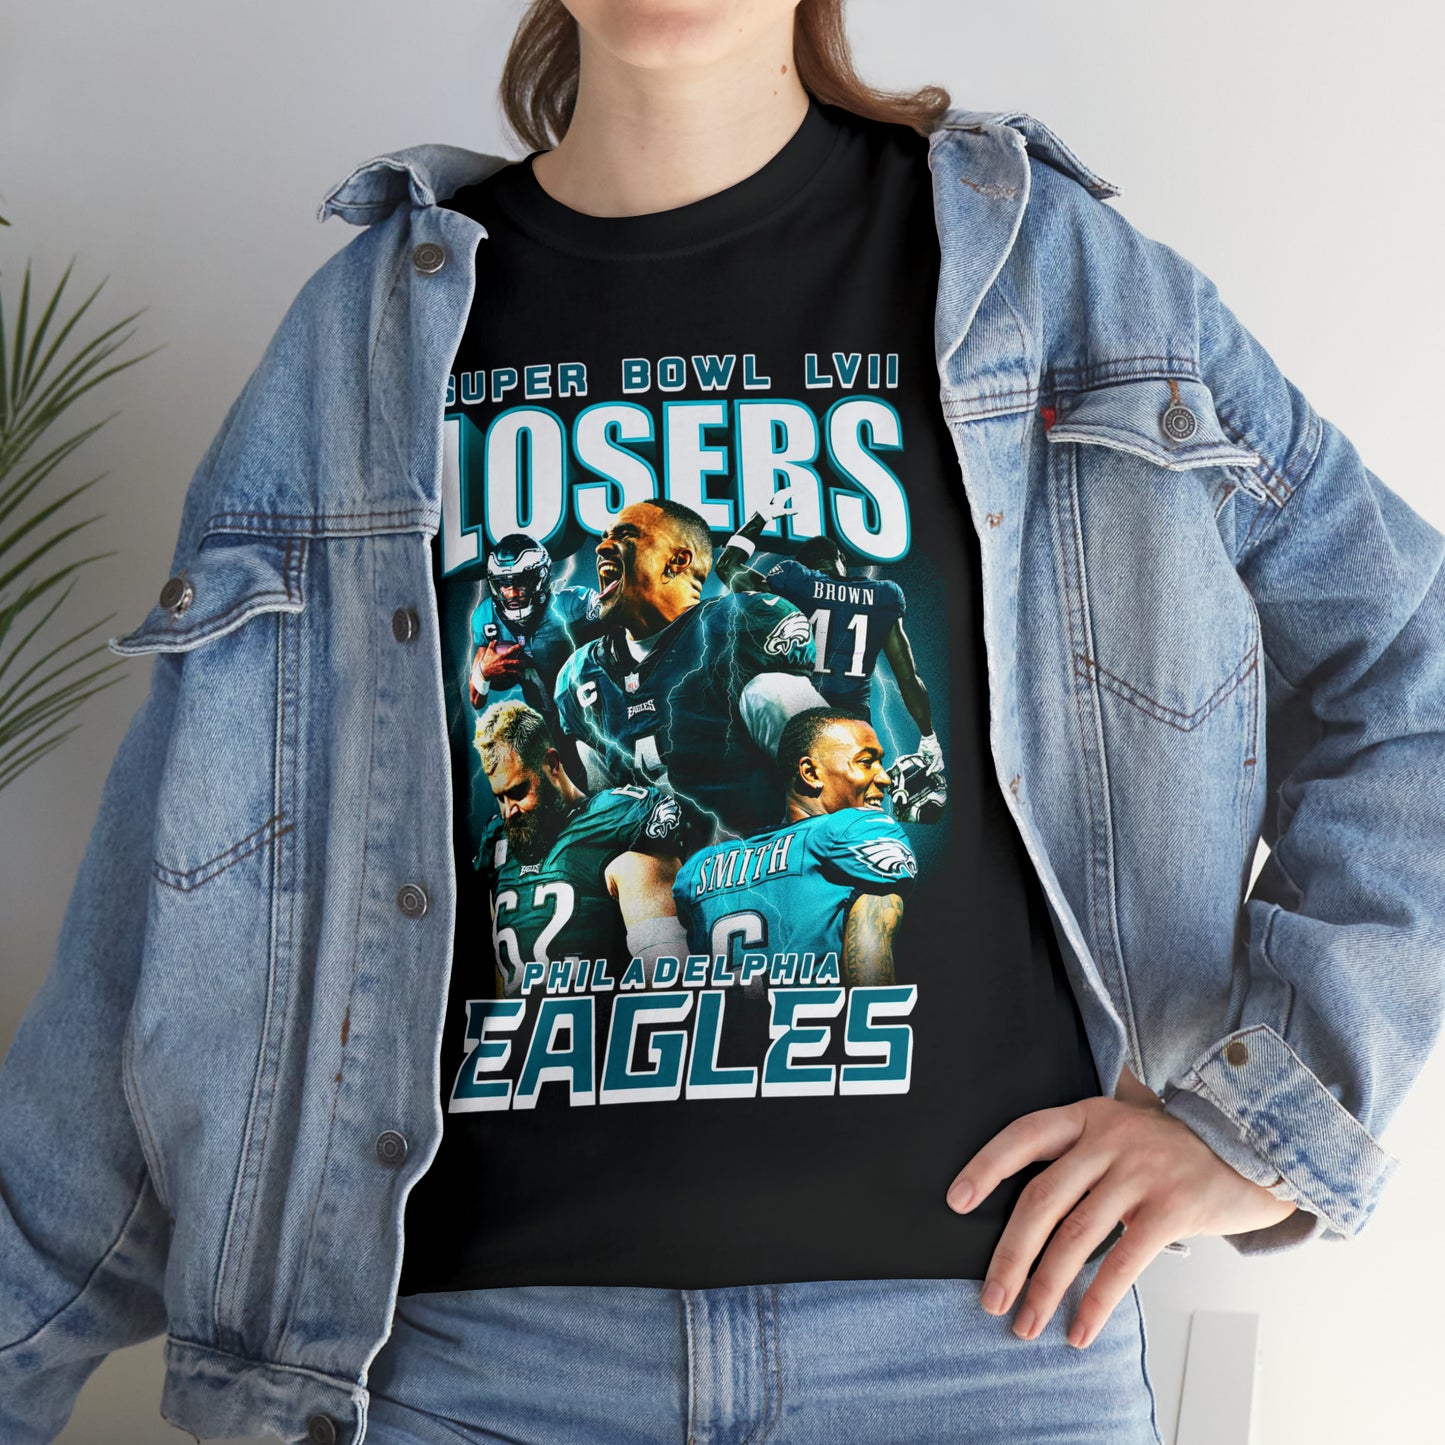 Super Bowl LVII Losers T-Shirt!